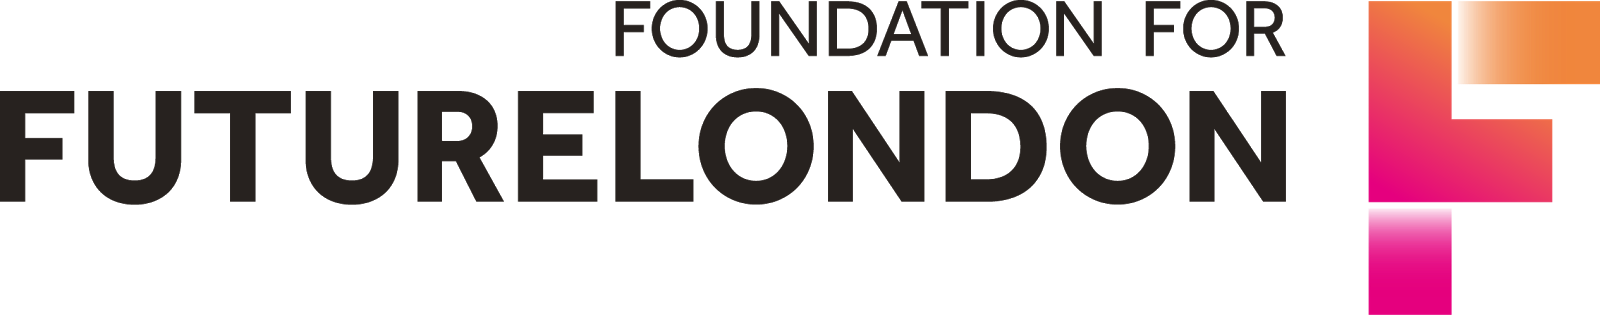 Foundation for Future London